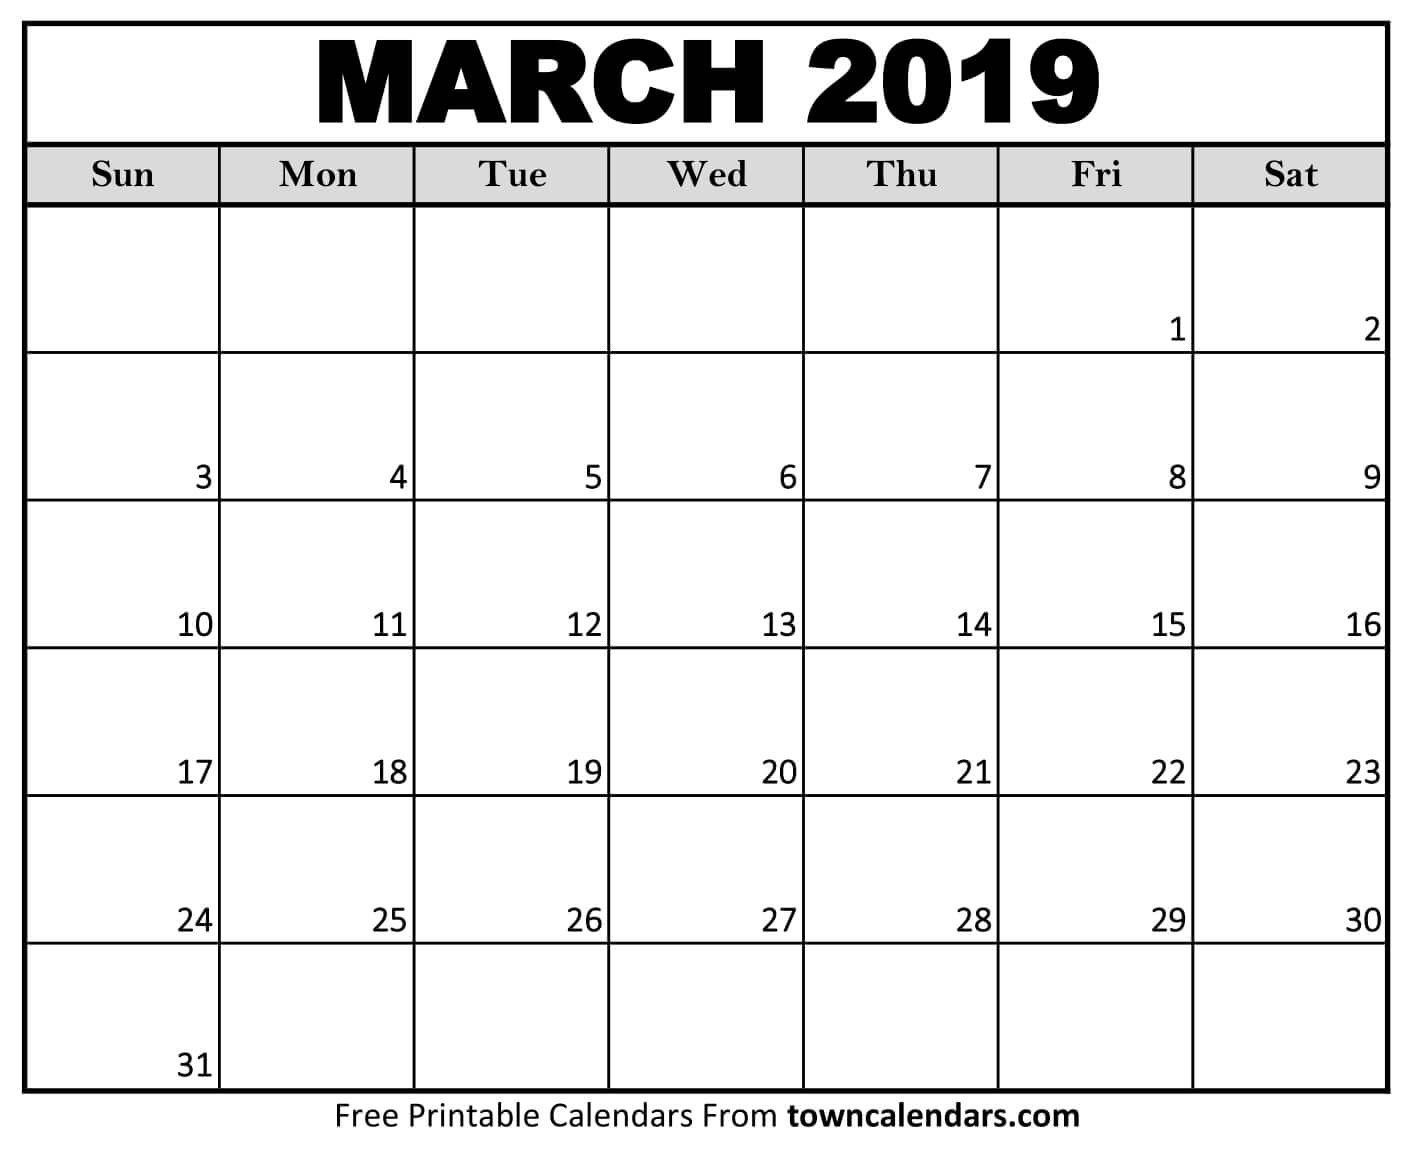 Printable March 2019 Calendar towncalendars